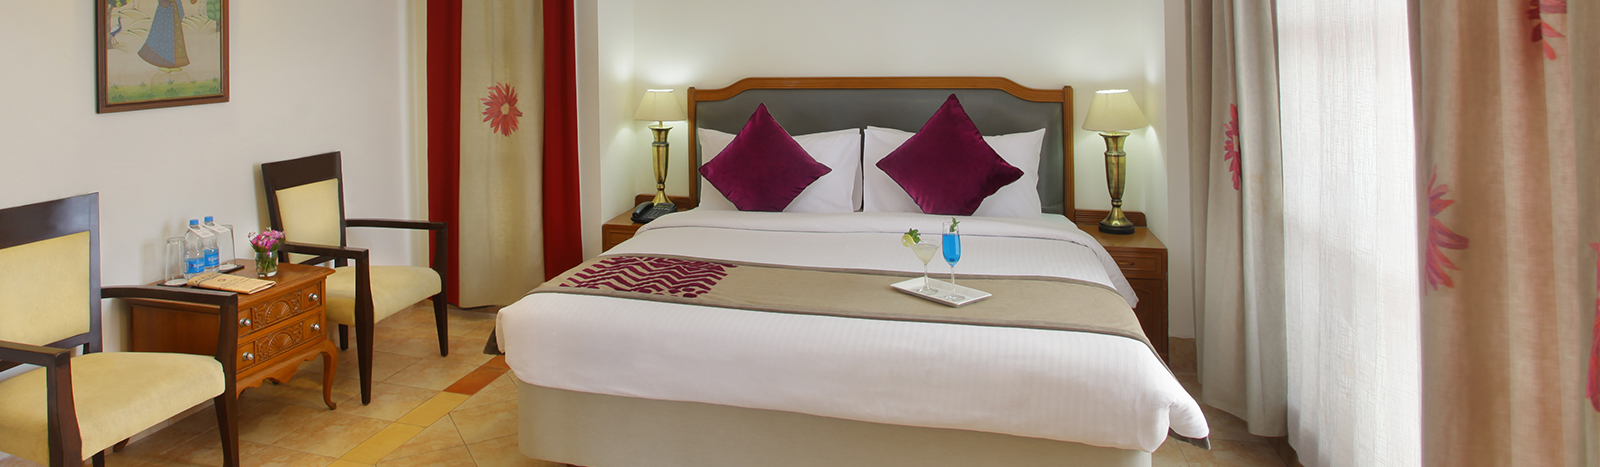 Accommodation - hotels in shimla near railway station